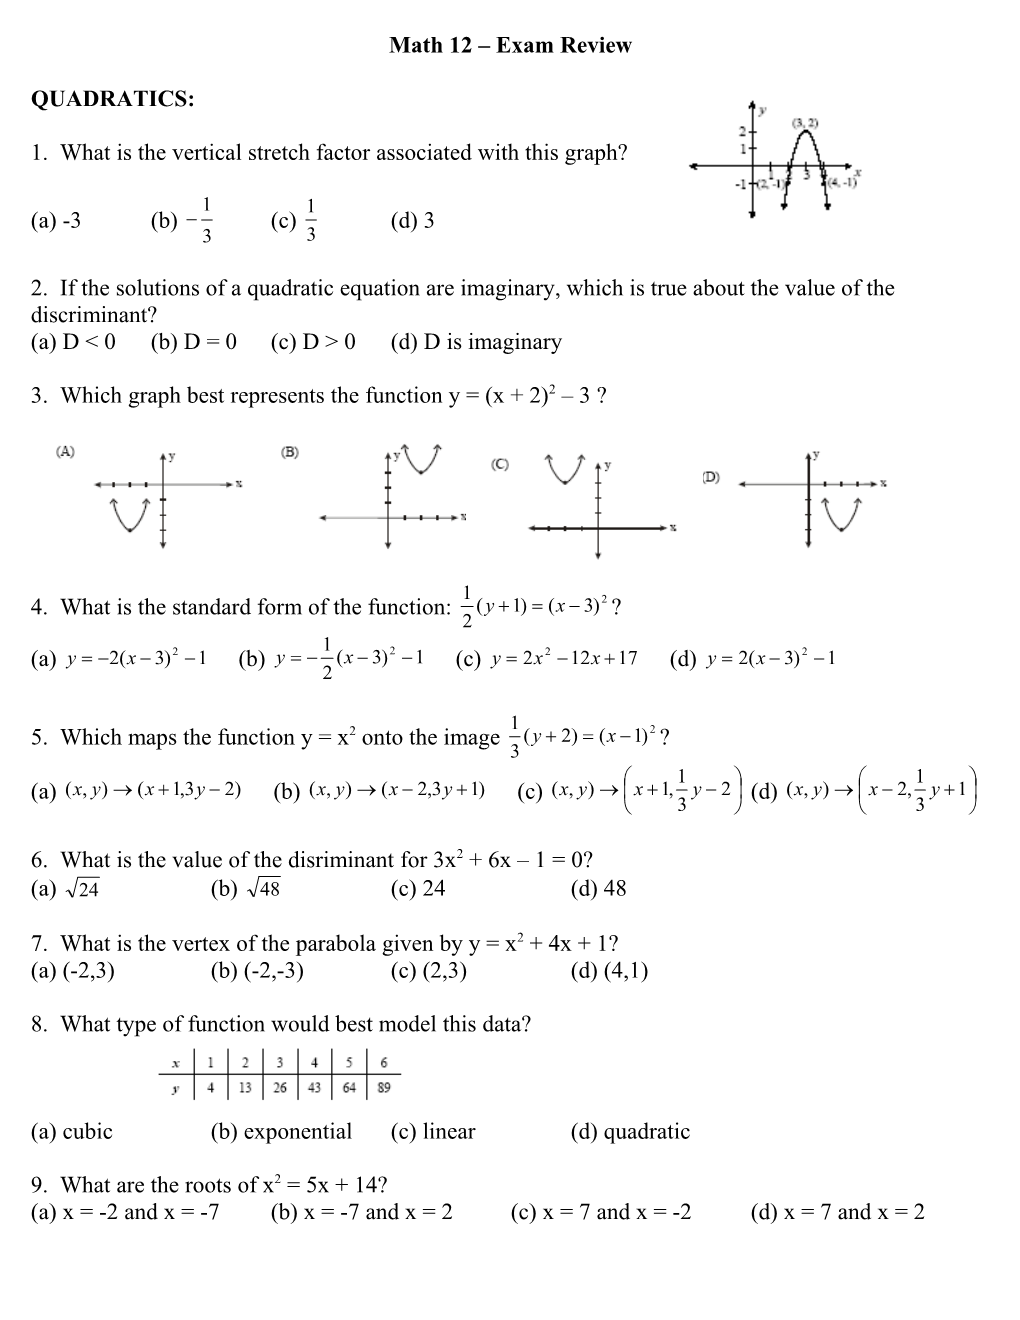 Math 12 Exam Review